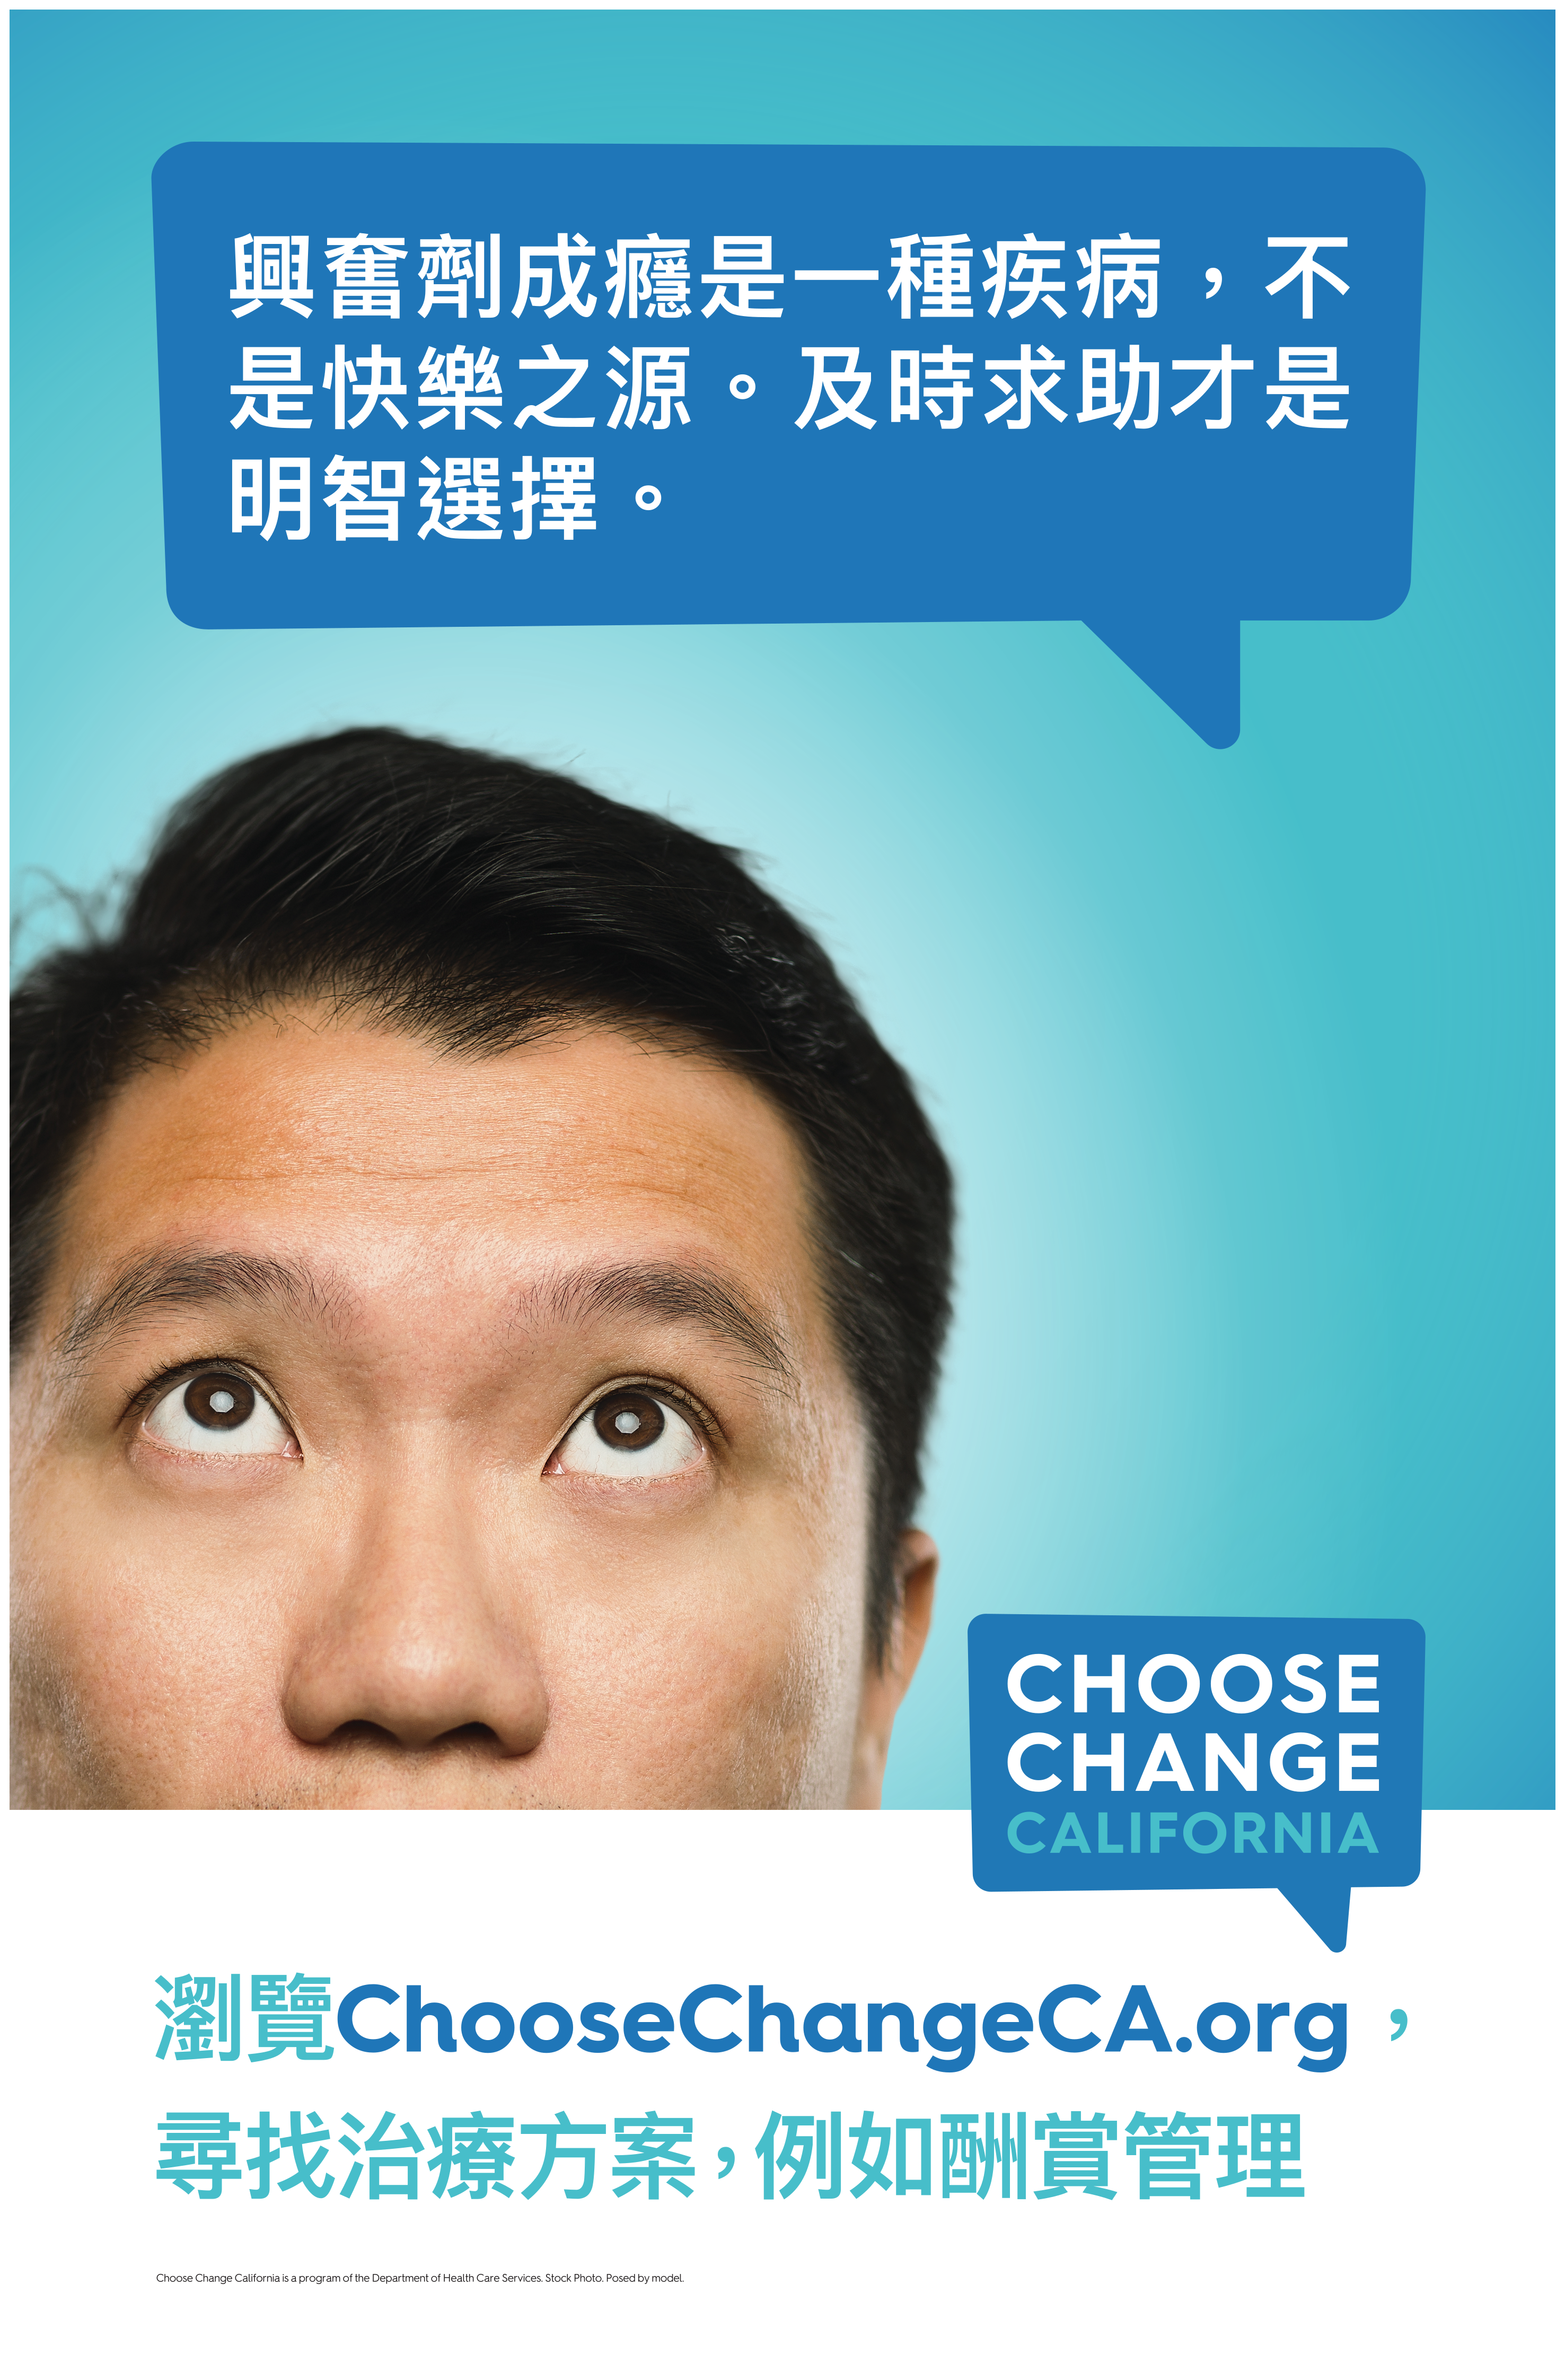 Pictured: Choose Change California ChooseChangeCA.org poster in Mandarin